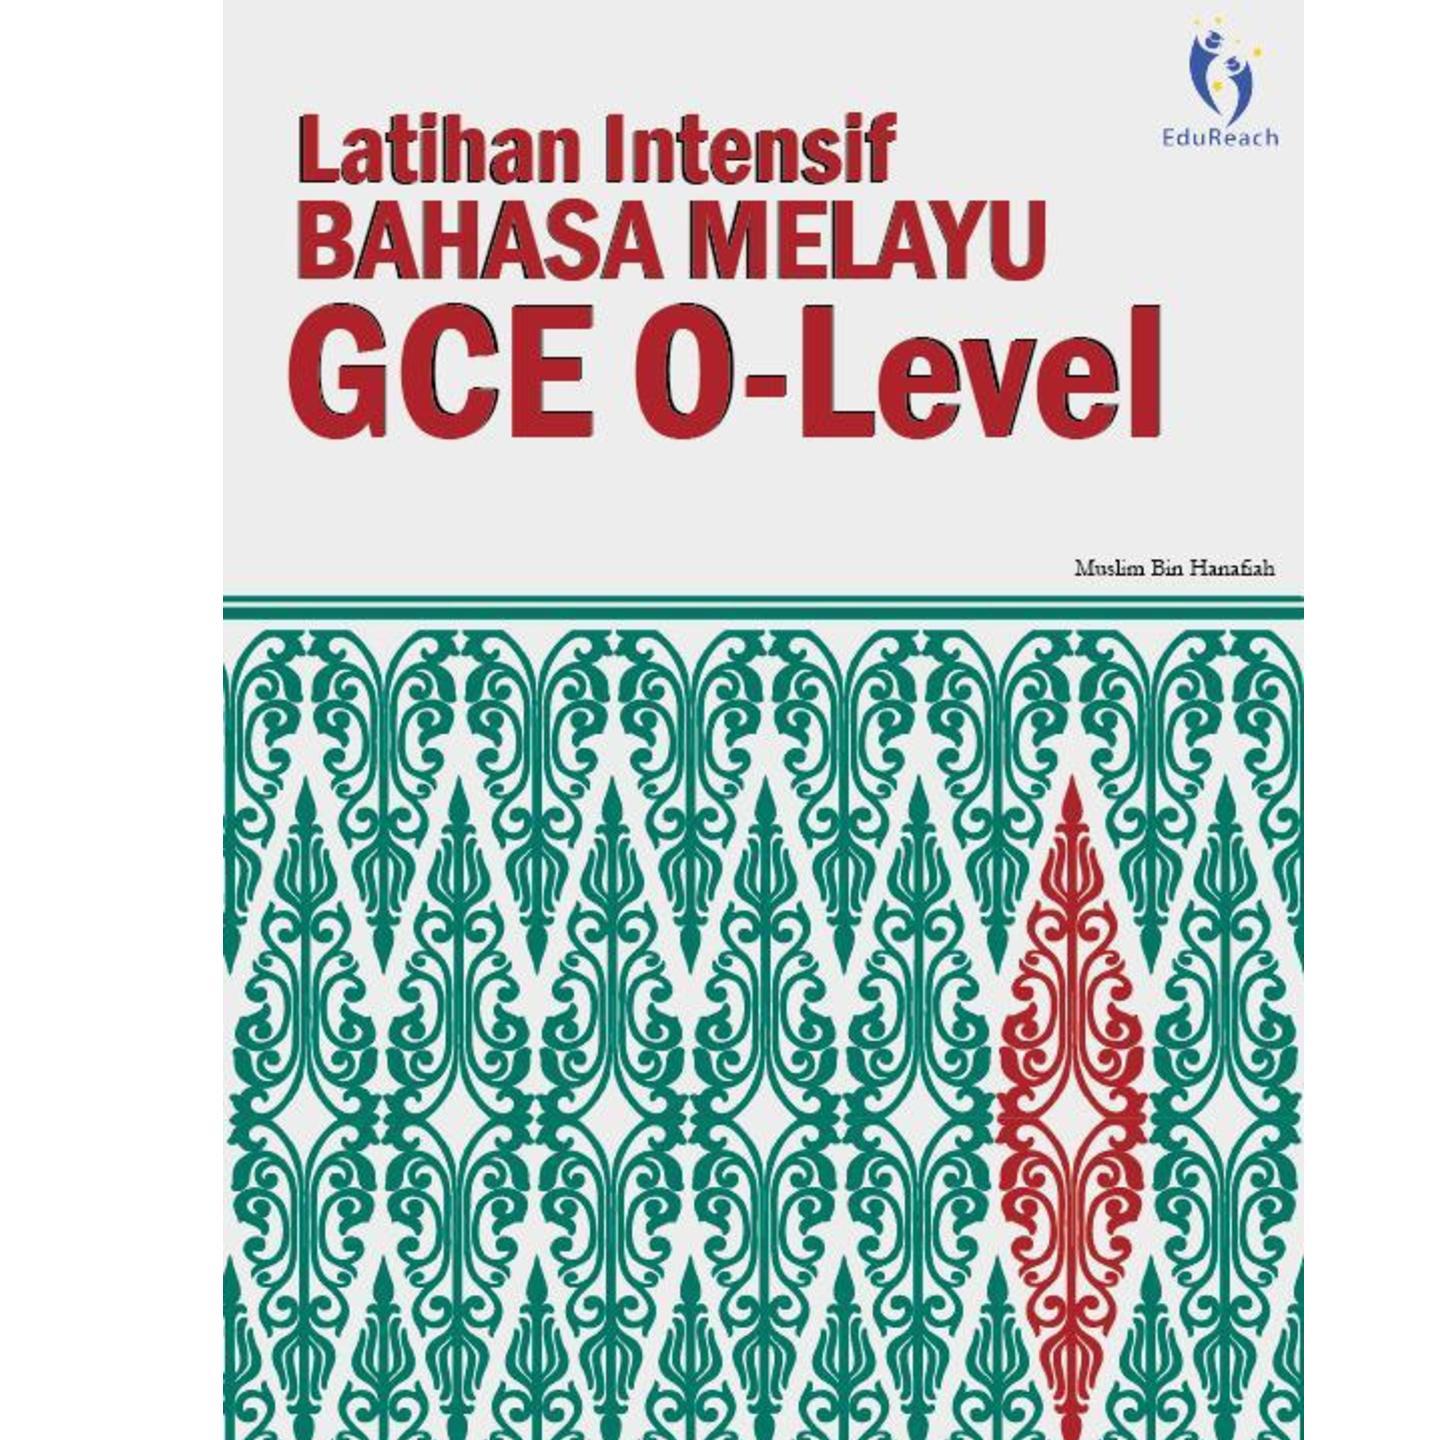 Latihan Intensif Bahasa Melayu GCE O-Level